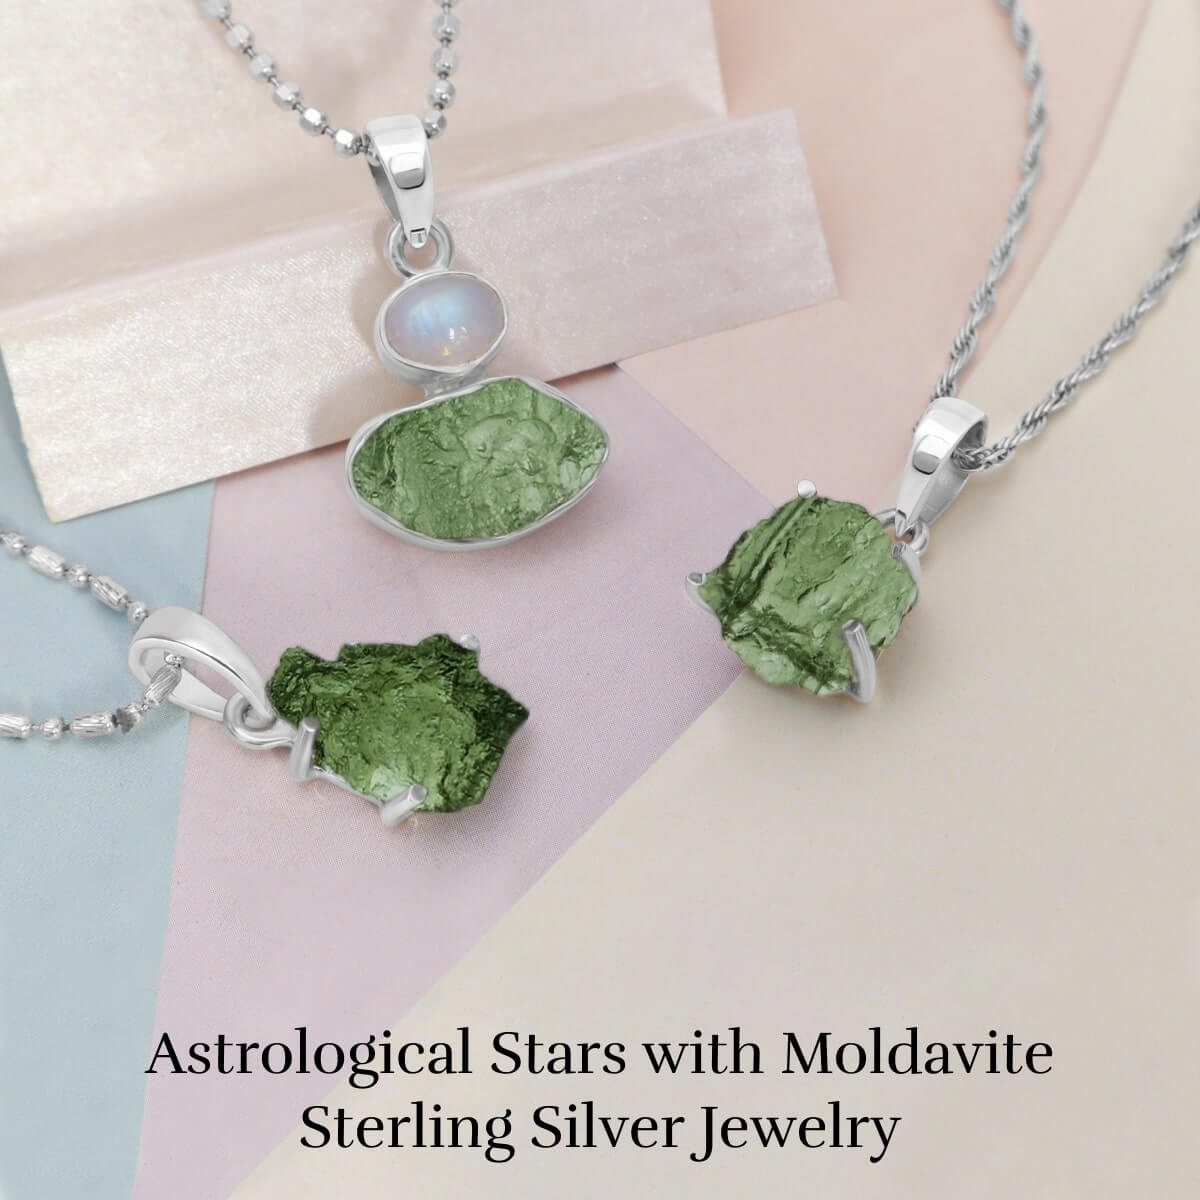 Moldavite Sterling Silver Jewelry - Zodiac Association